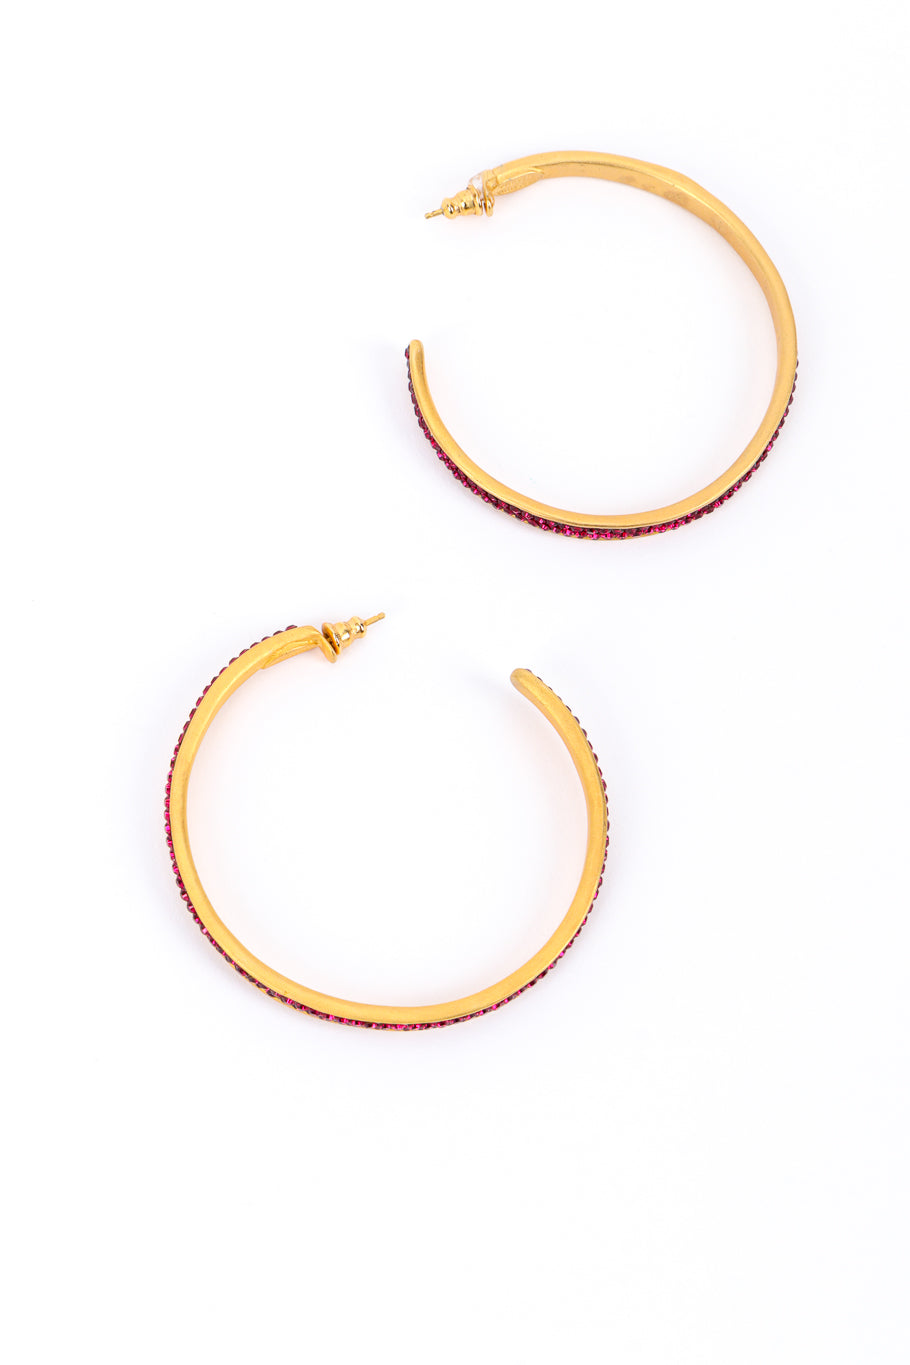 Rhinestone Hoop Earrings by Deanna Hamro sides @recessla